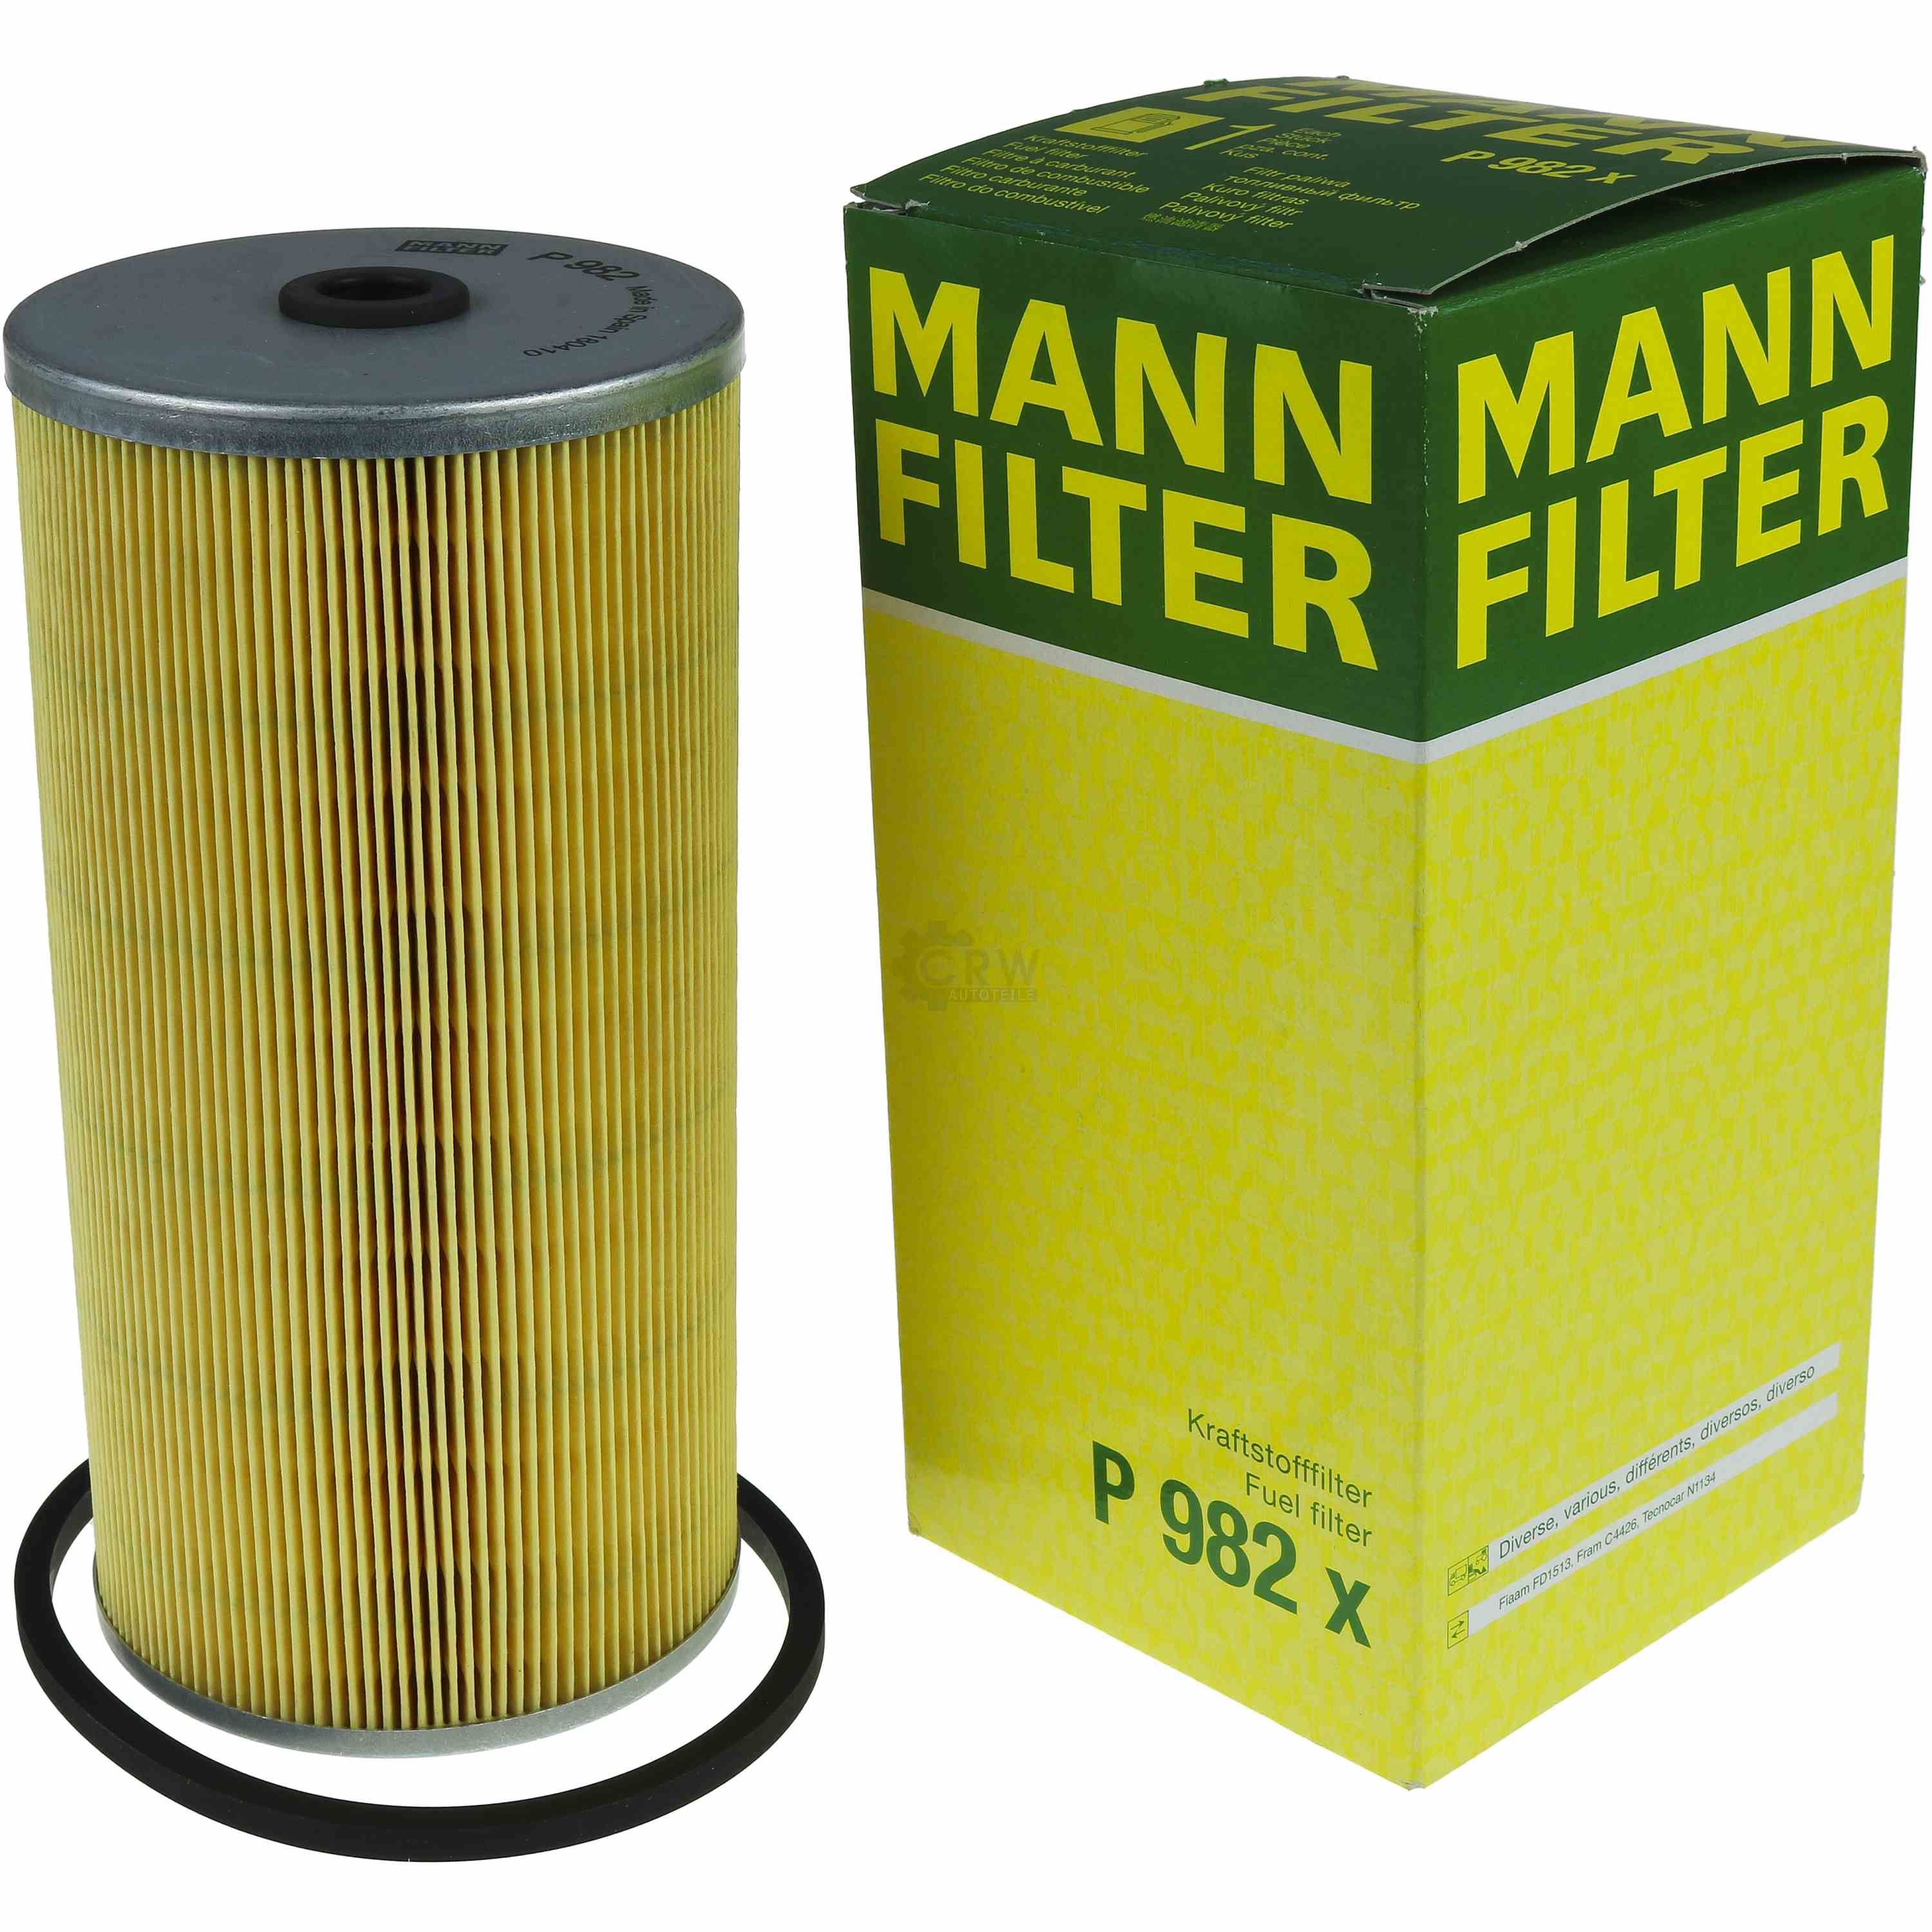 MANN Kraftstoff Filter P 982 x